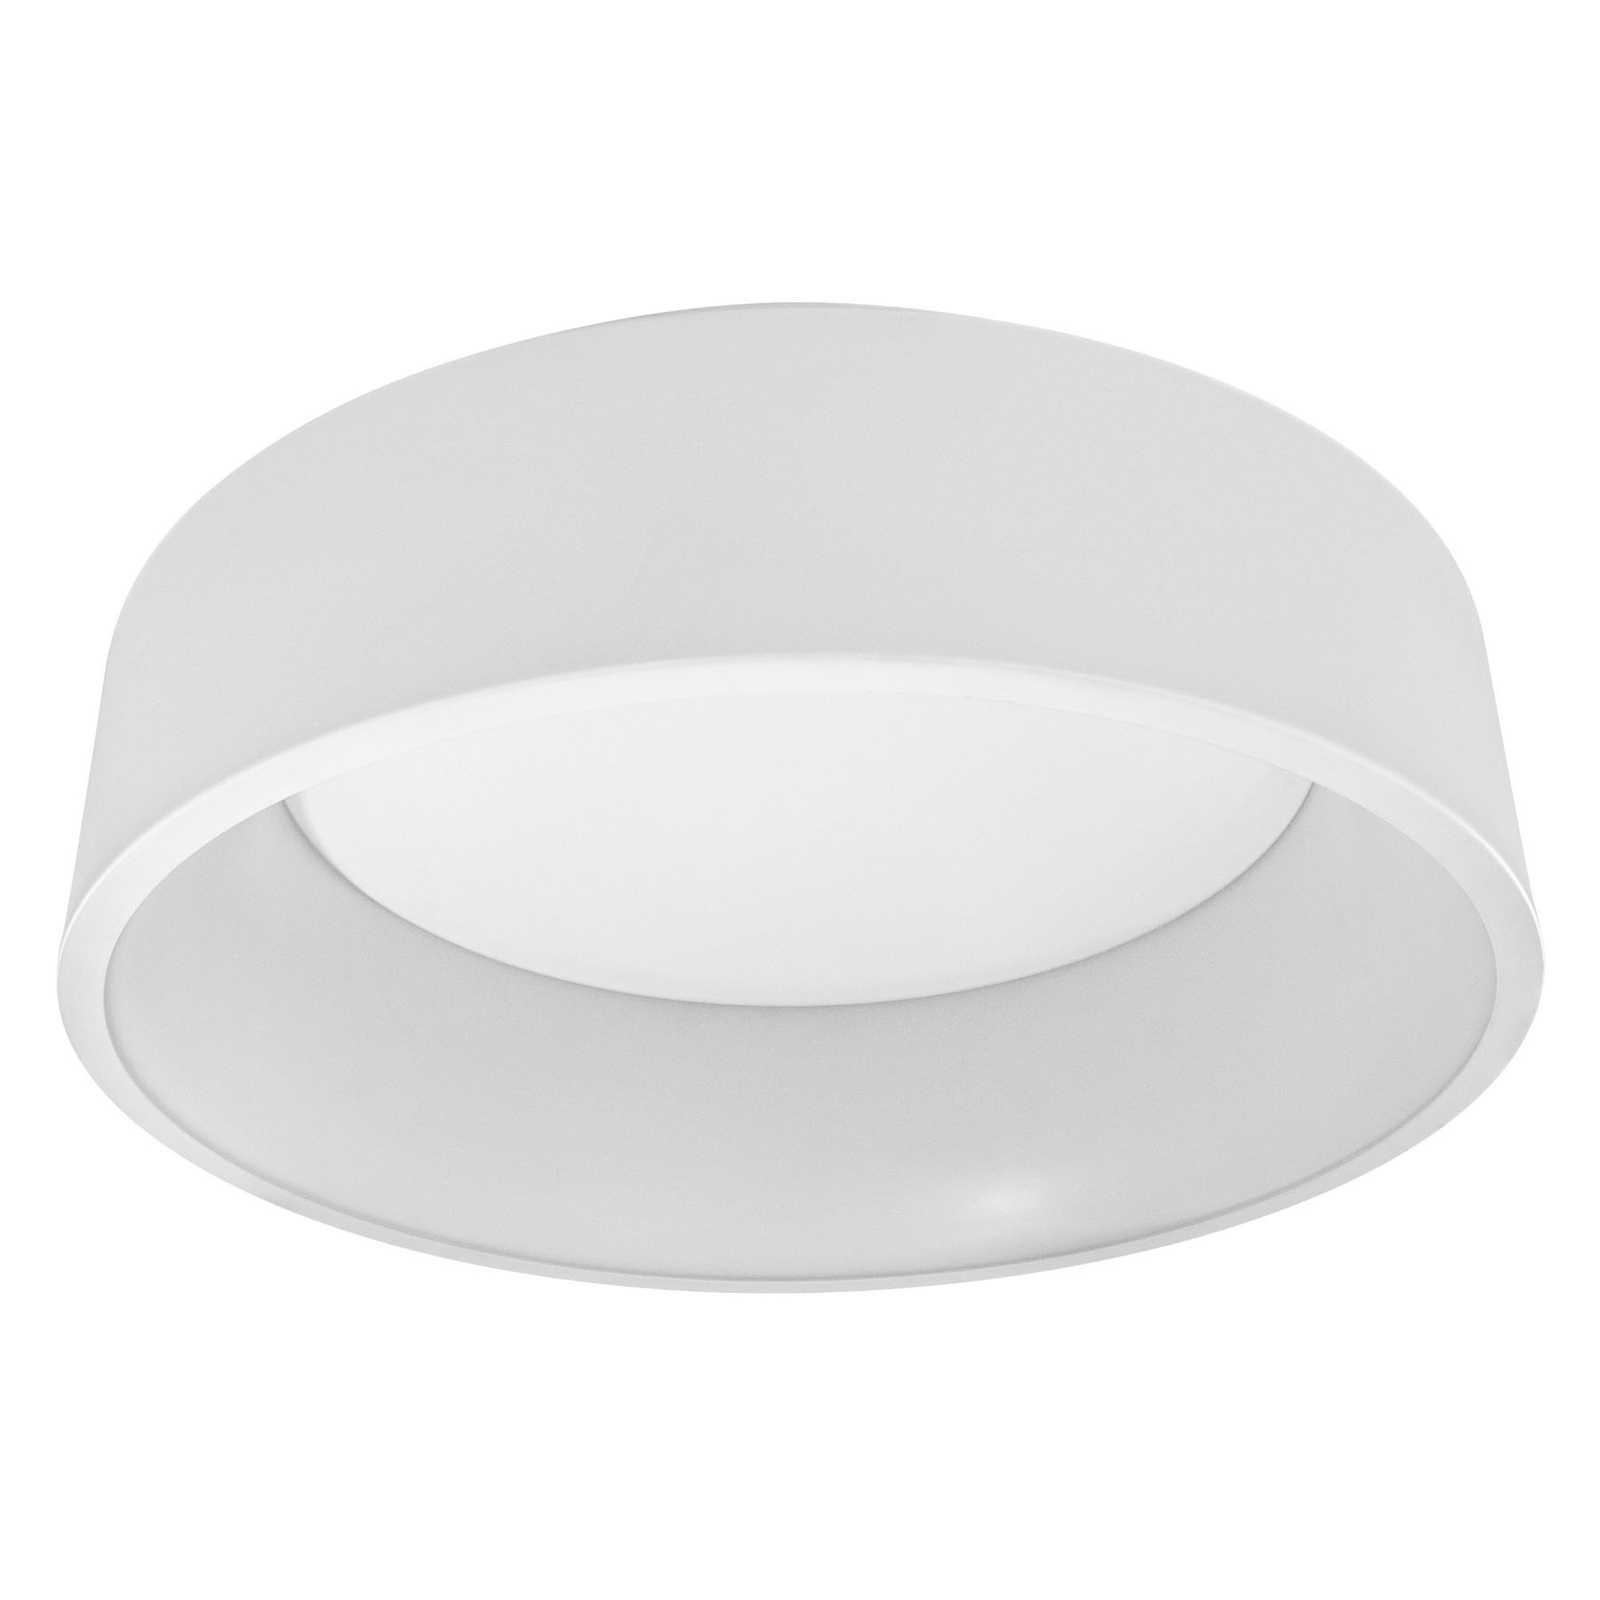 LEDVANCE SMART+ WiFi Orbis Cylinder CCT 45cm white